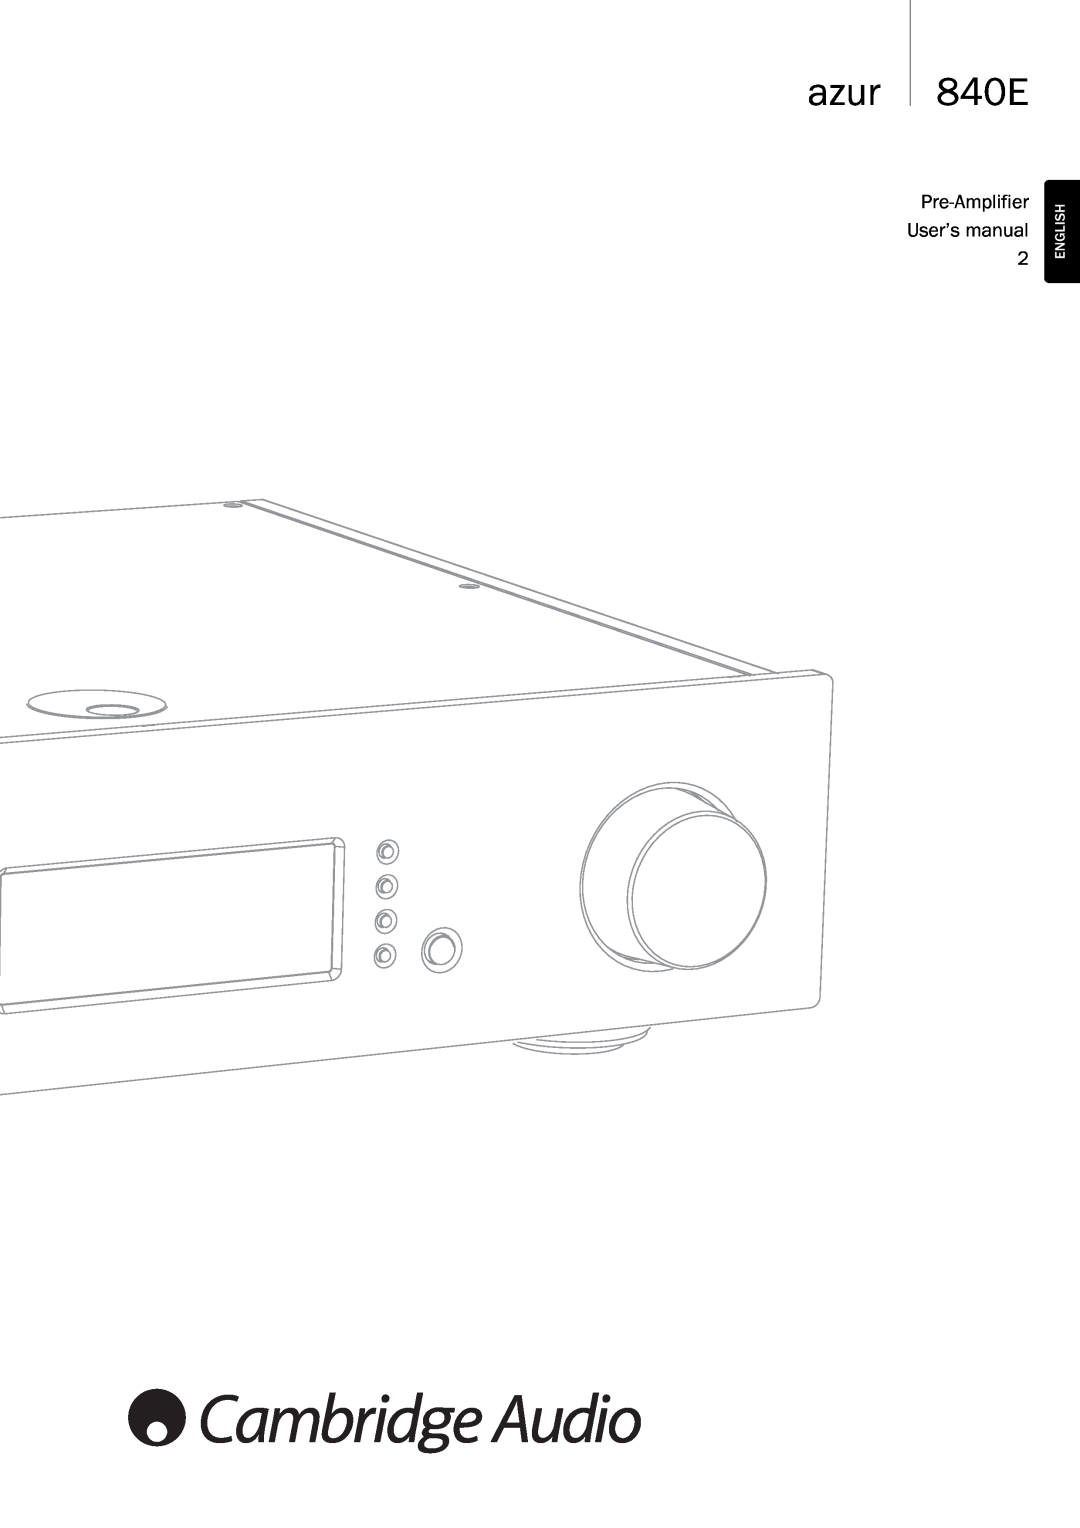 Cambridge Audio Azur 840EW user manual azur 840E, English 